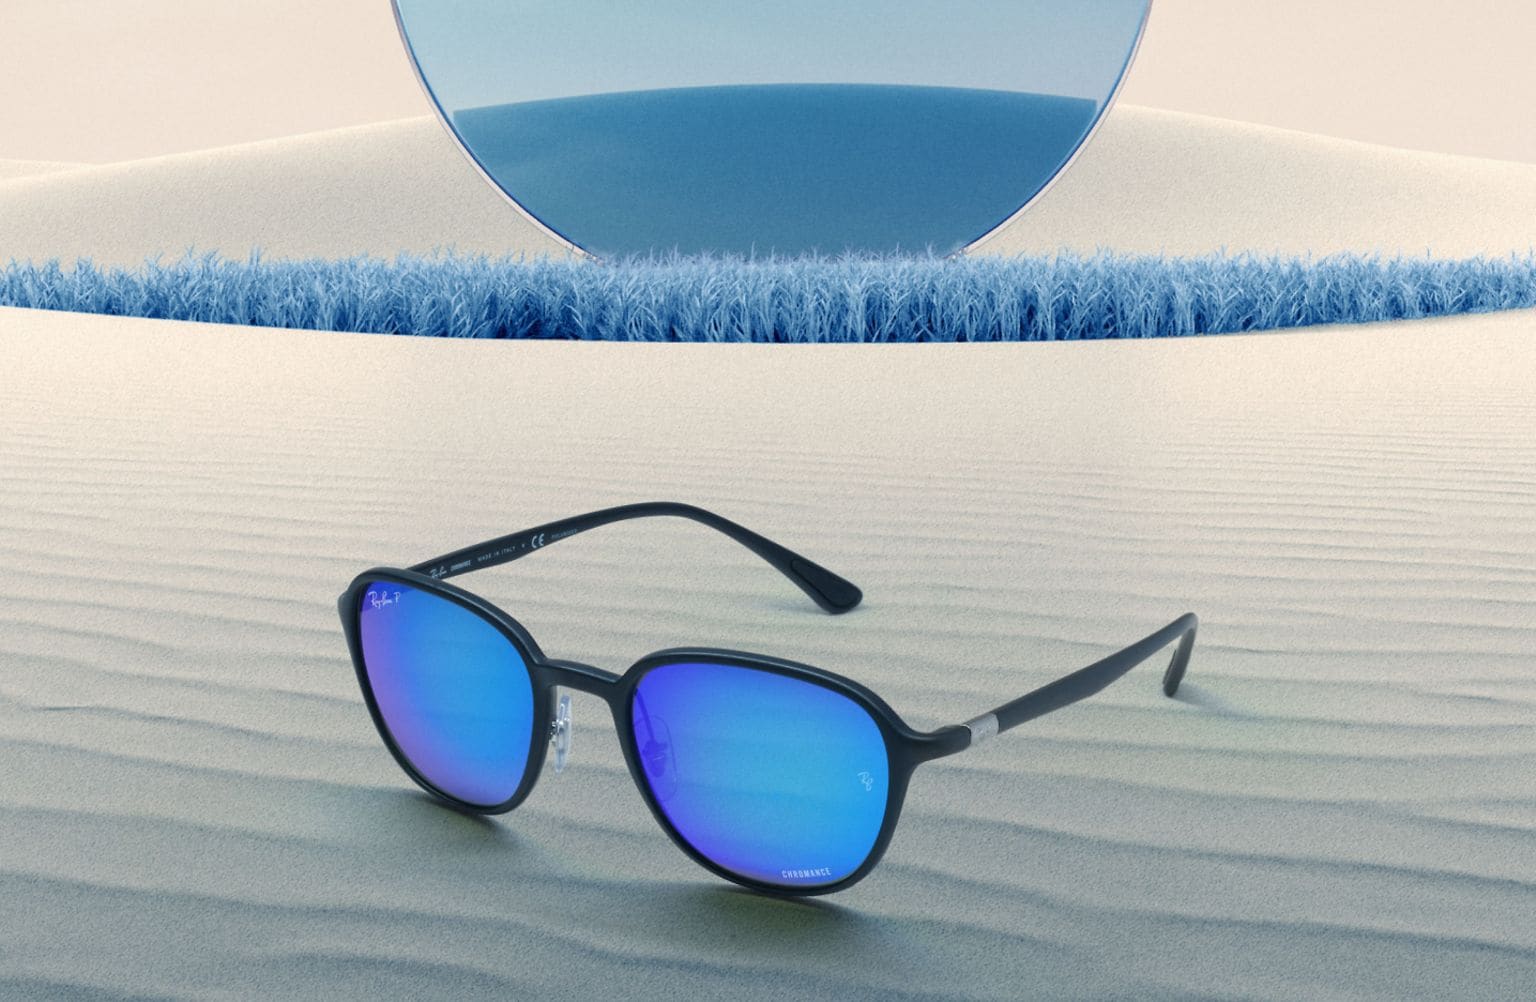 Sunglasses Wallpapers